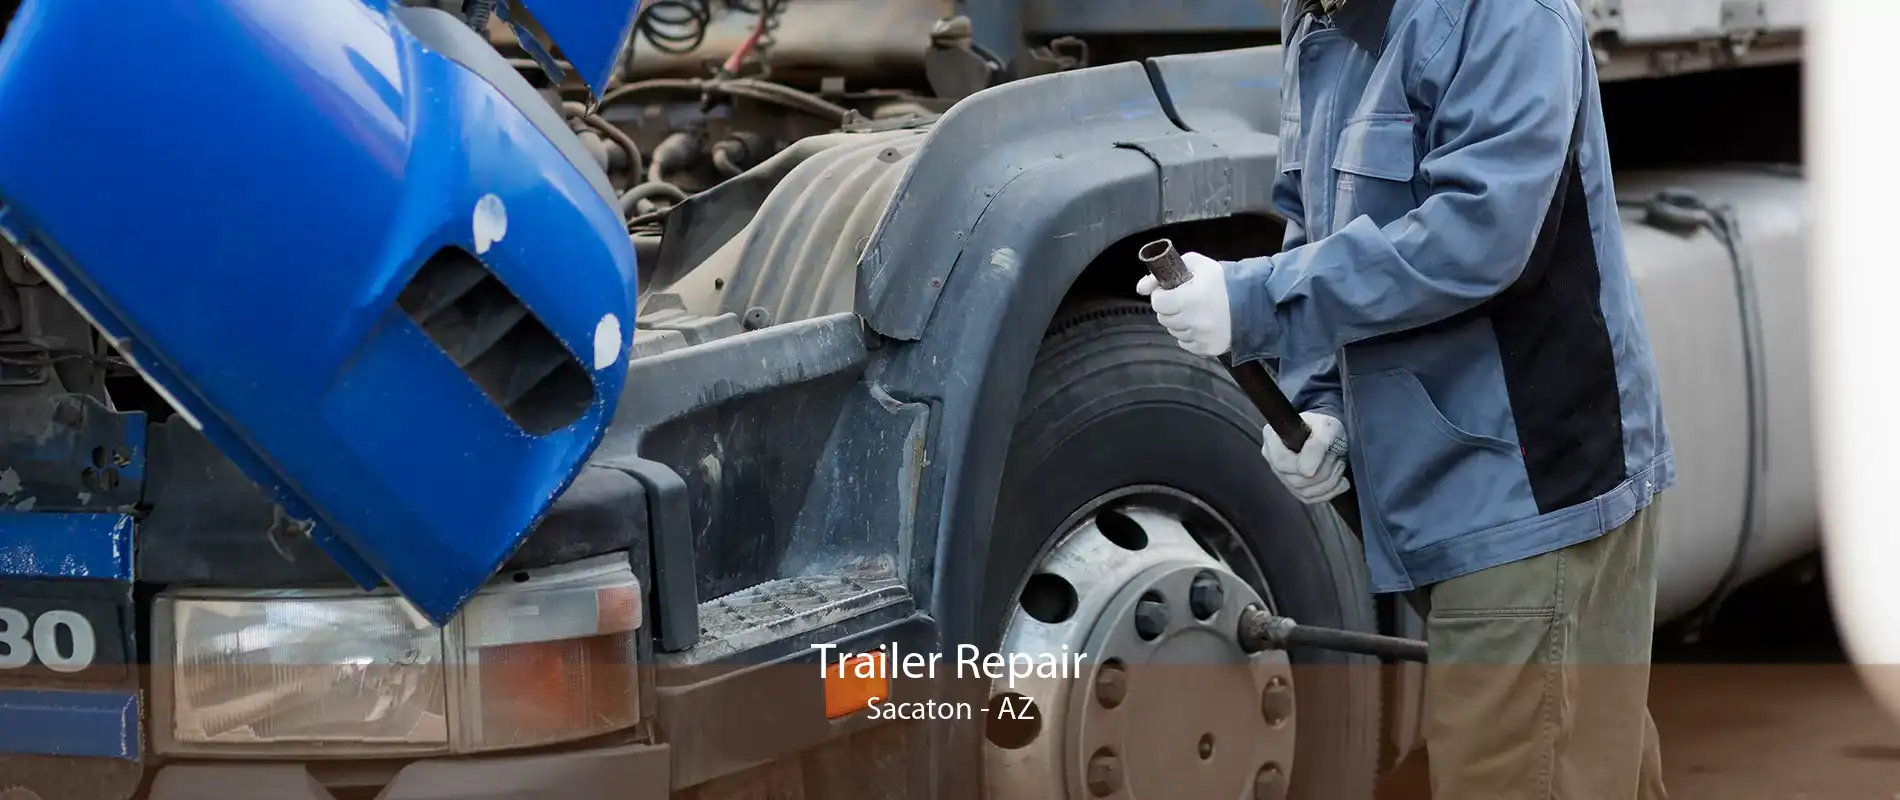 Trailer Repair Sacaton - AZ